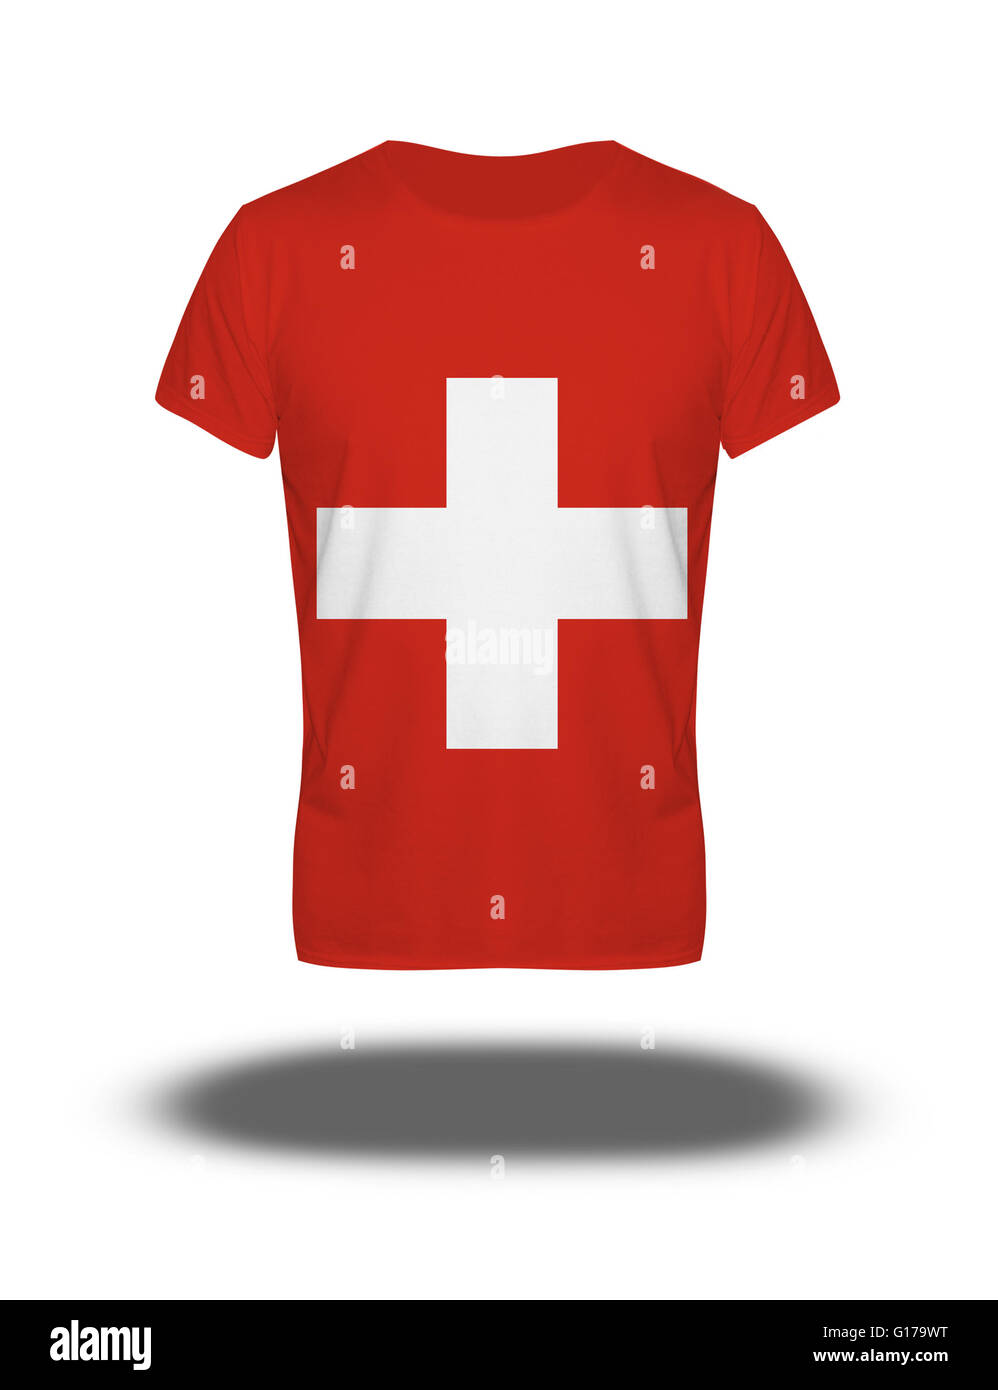 Switzerland flag t-shirt on white background with shadow Stock Photo